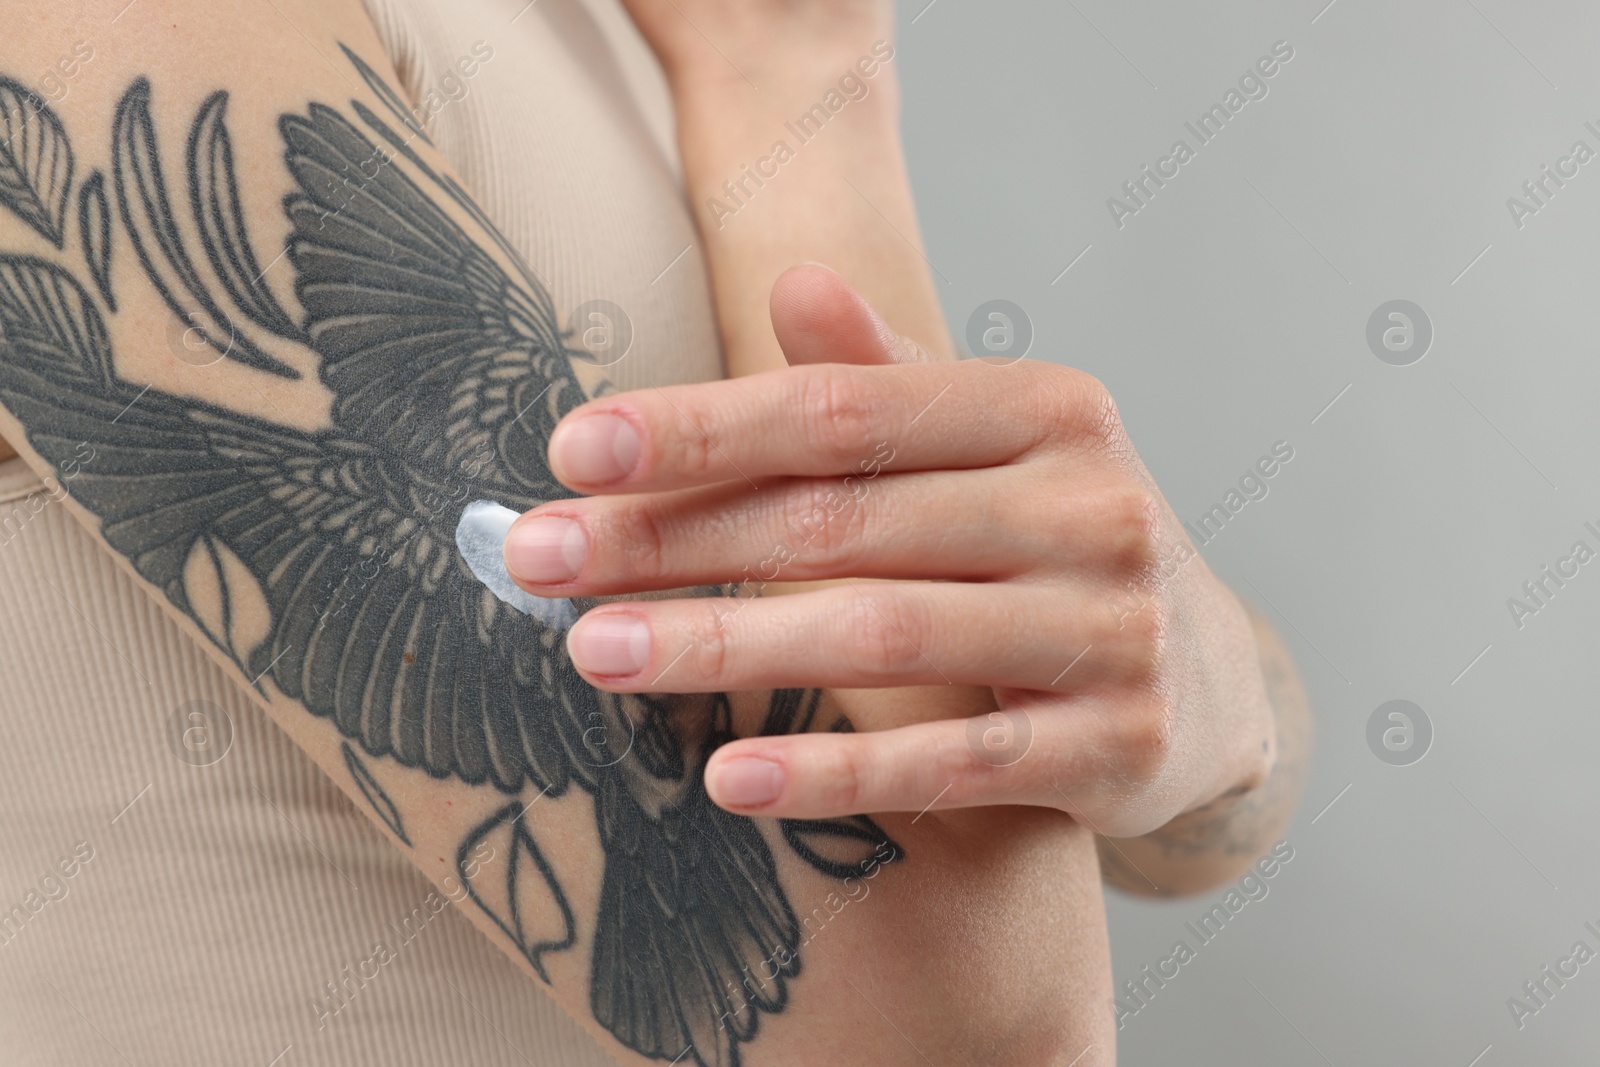 Photo of Tattooed woman applying cream onto her arm on gray background, closeup